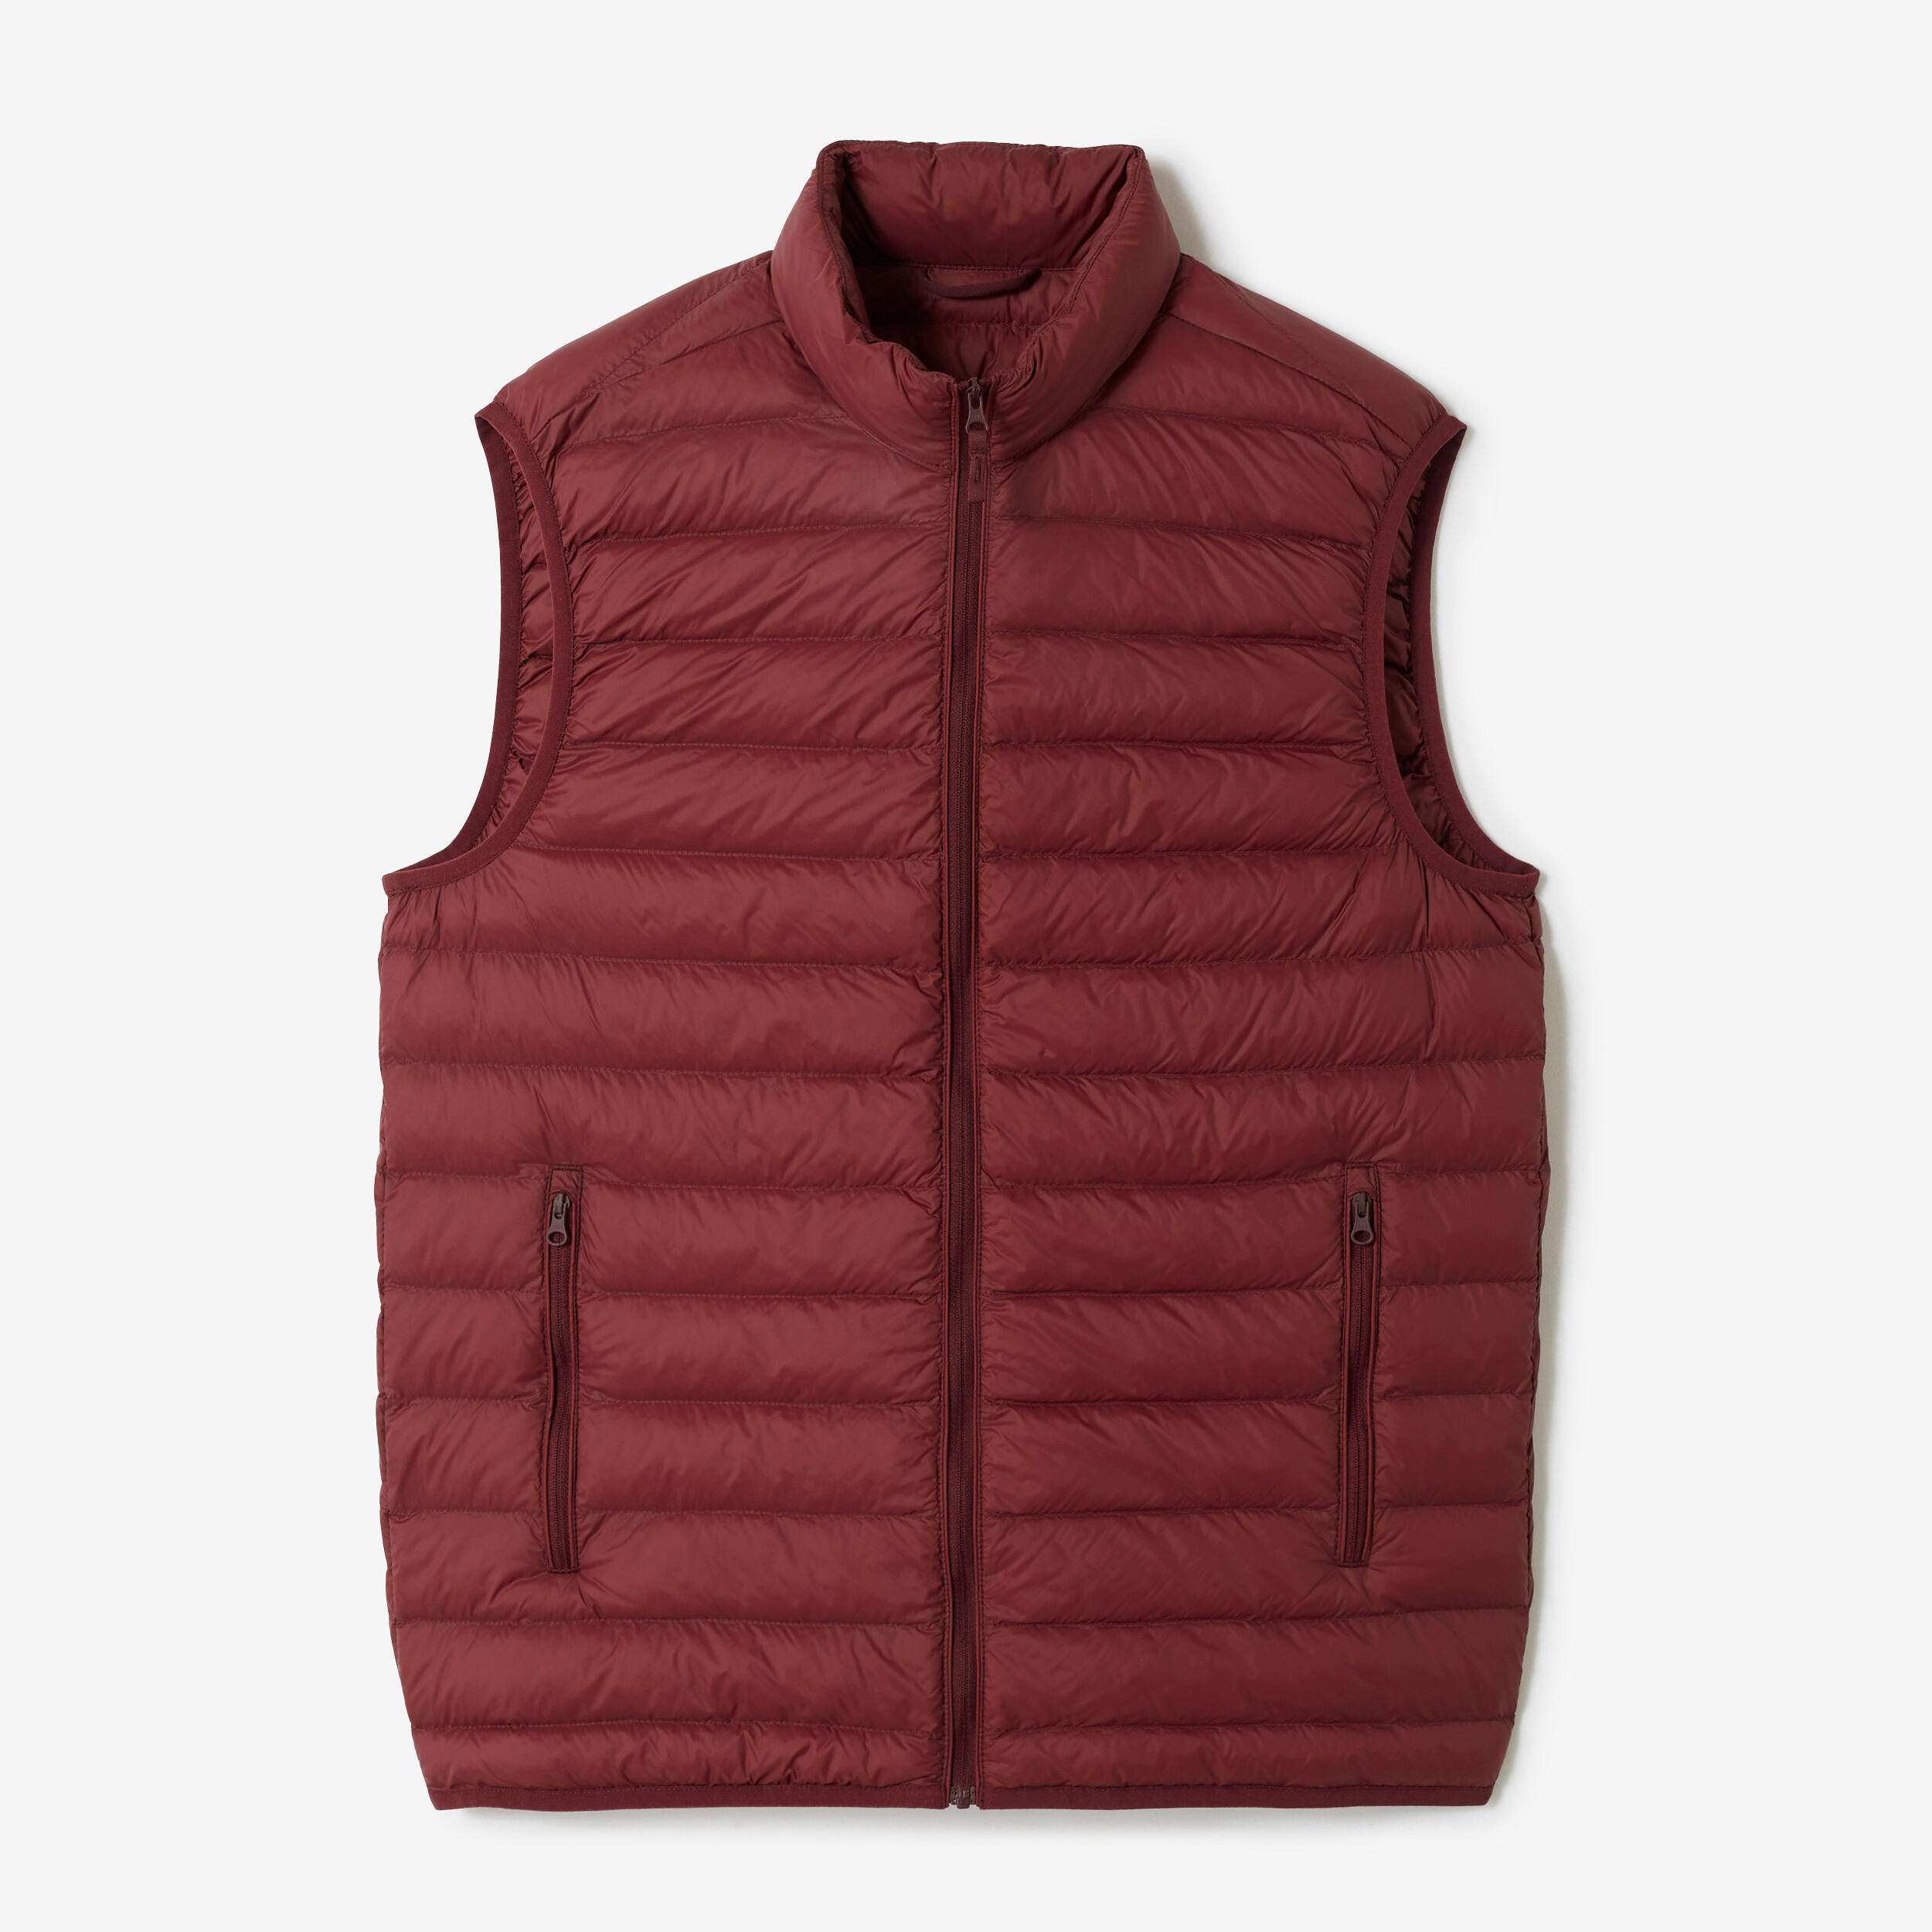 Men's golf sleeveless down jacket - MW500 burgundy 10/10